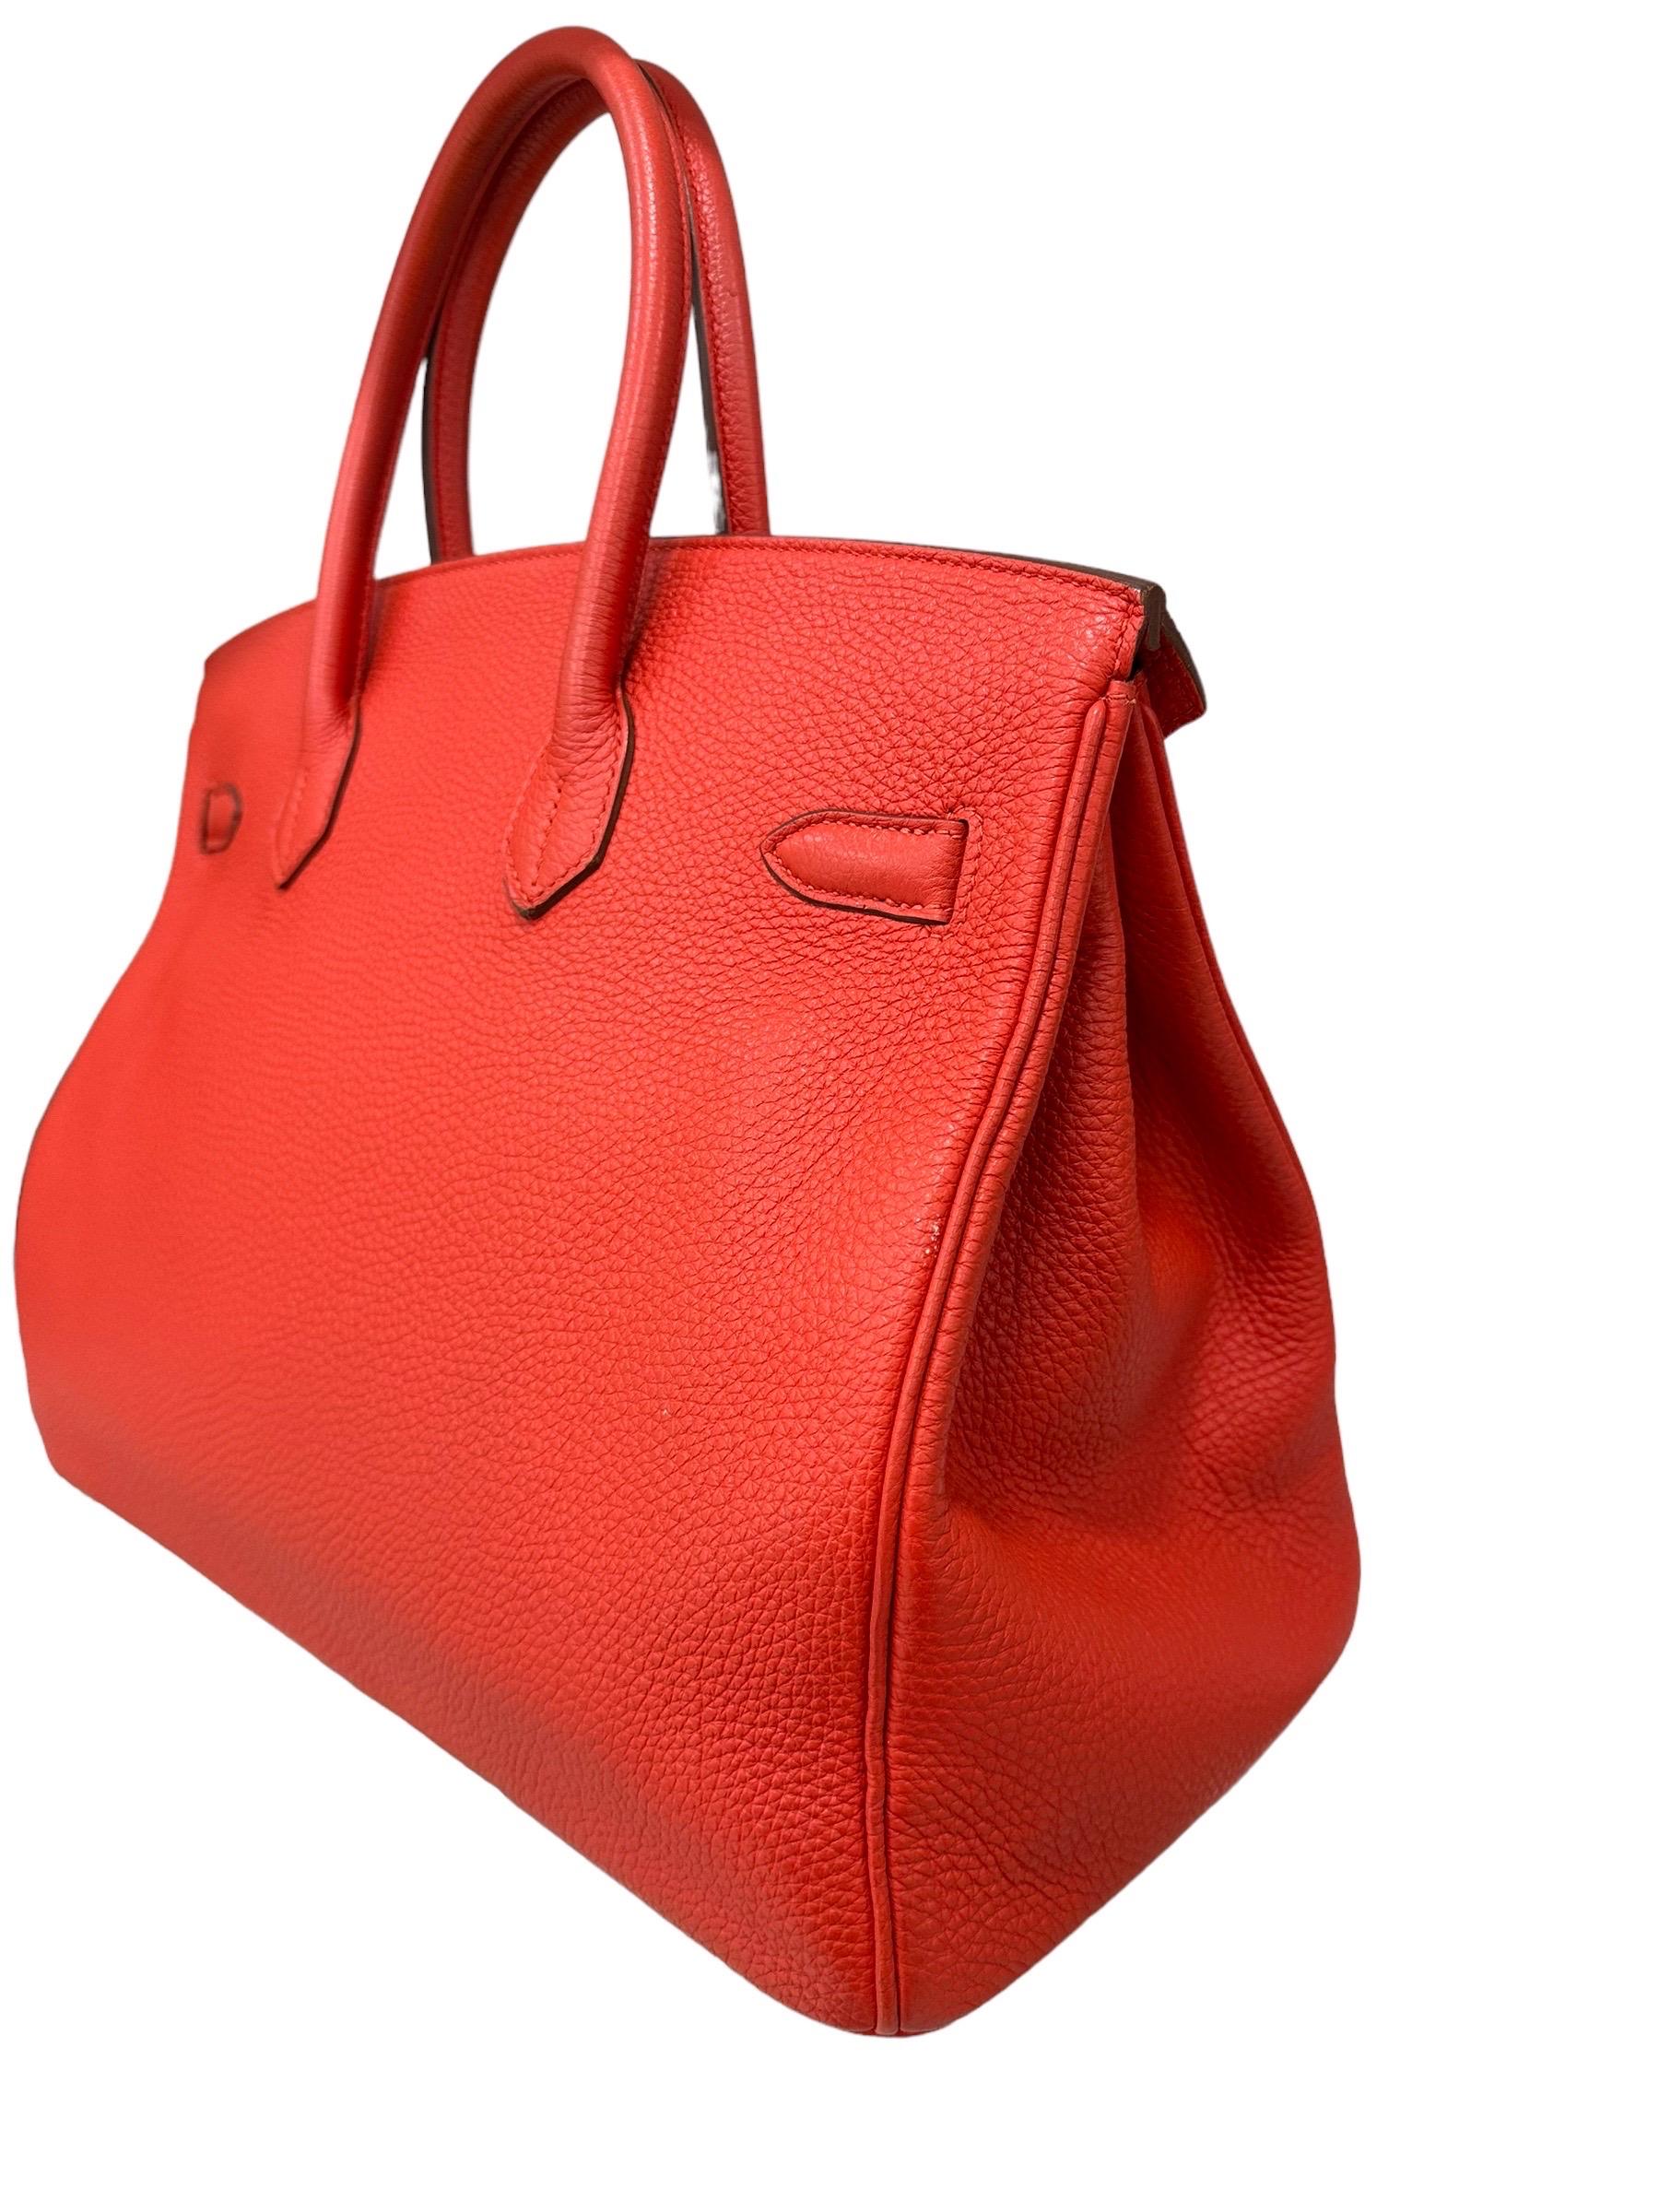 2011 Hermès Birkin 35 Togo Leather Rouge Capucine Top Handle Bag For Sale 4